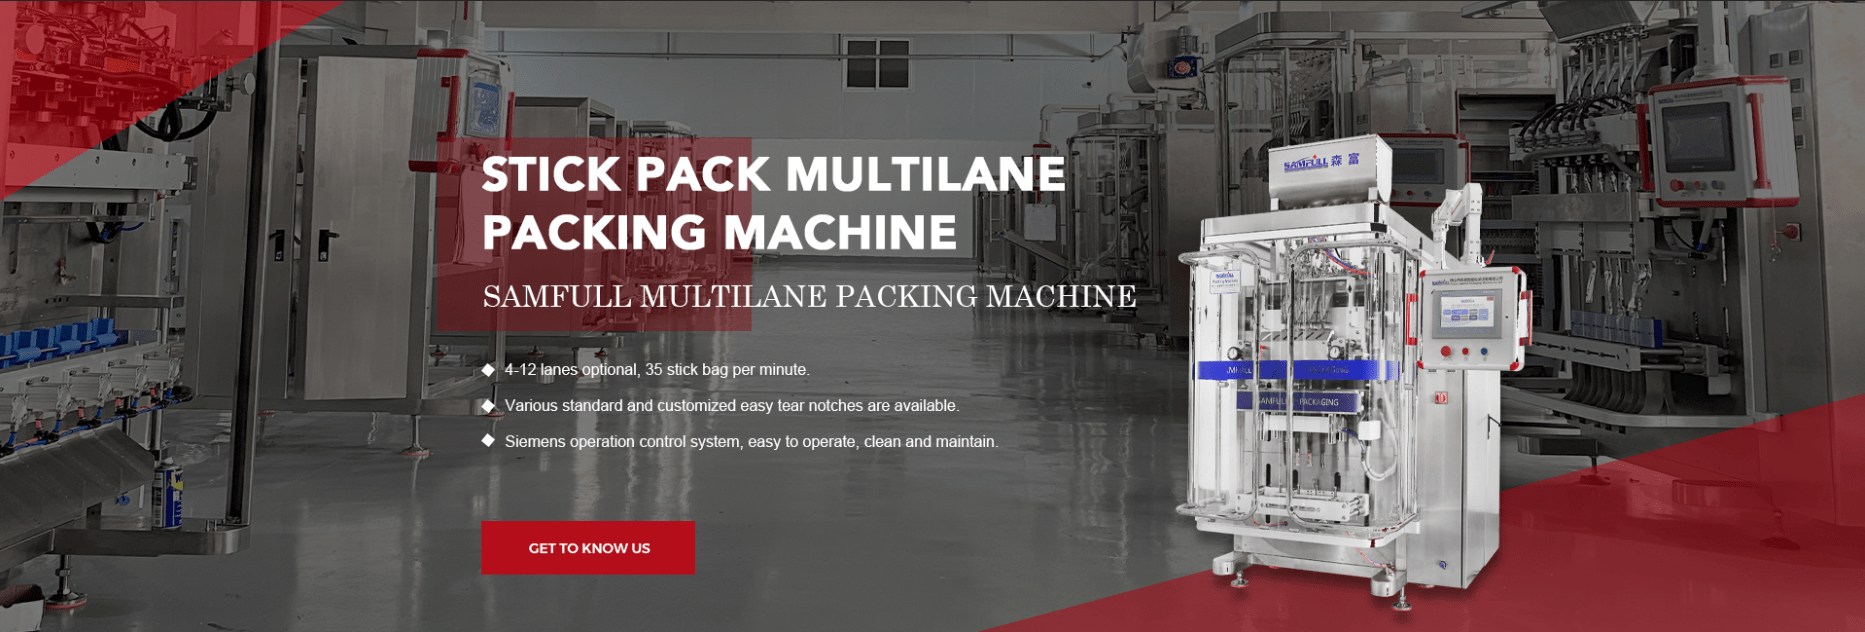 Stick Pack Multilane Packing Machine